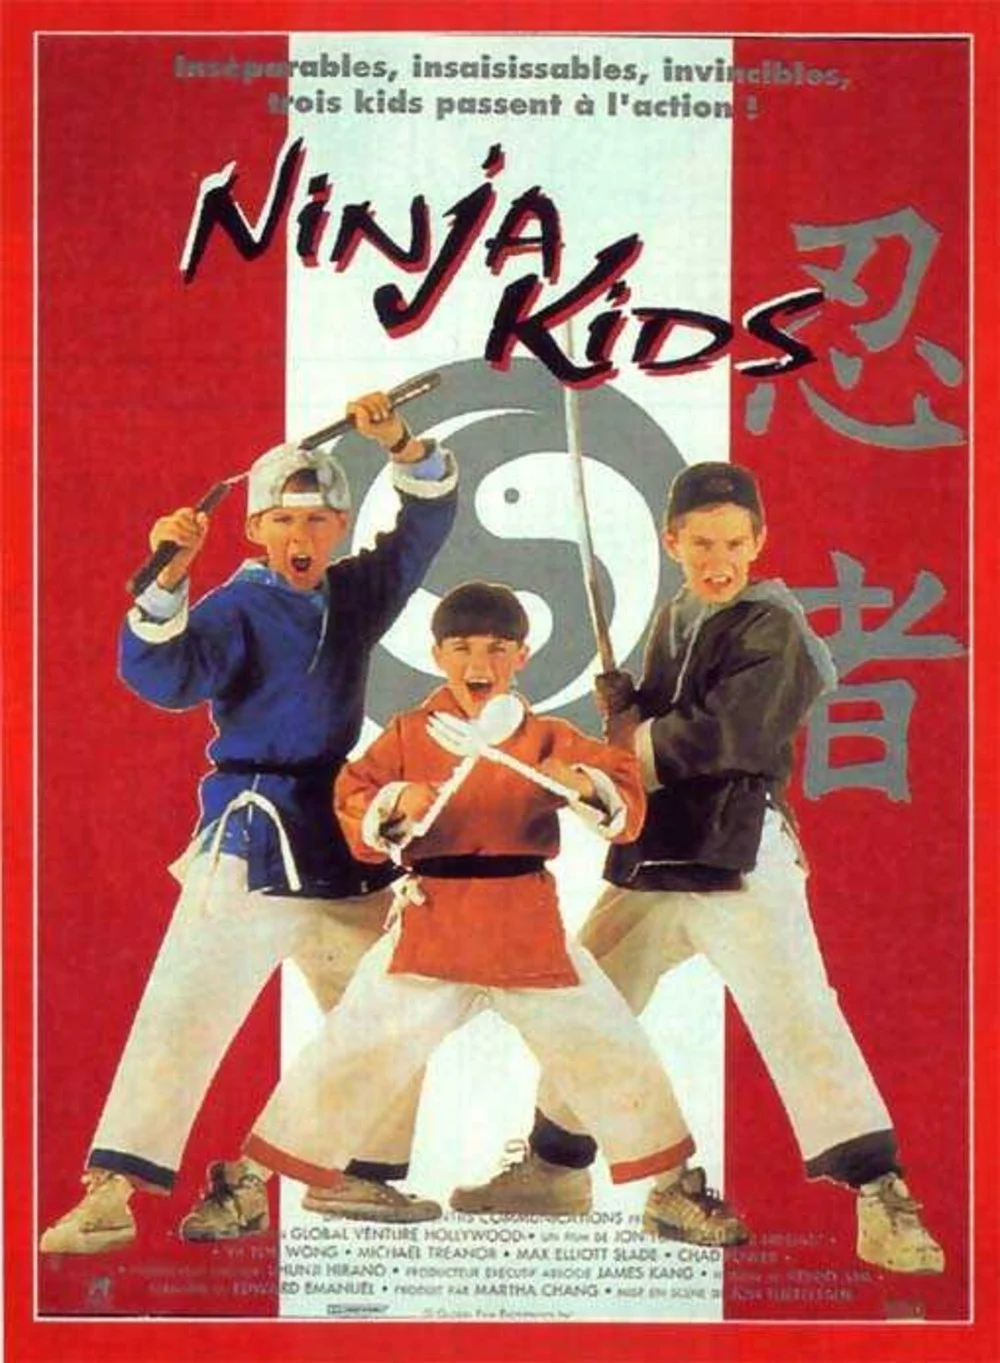 Les 3 Ninjas - Ninja Kids (Integrale) FRENCH DVDRIP 1992-1998